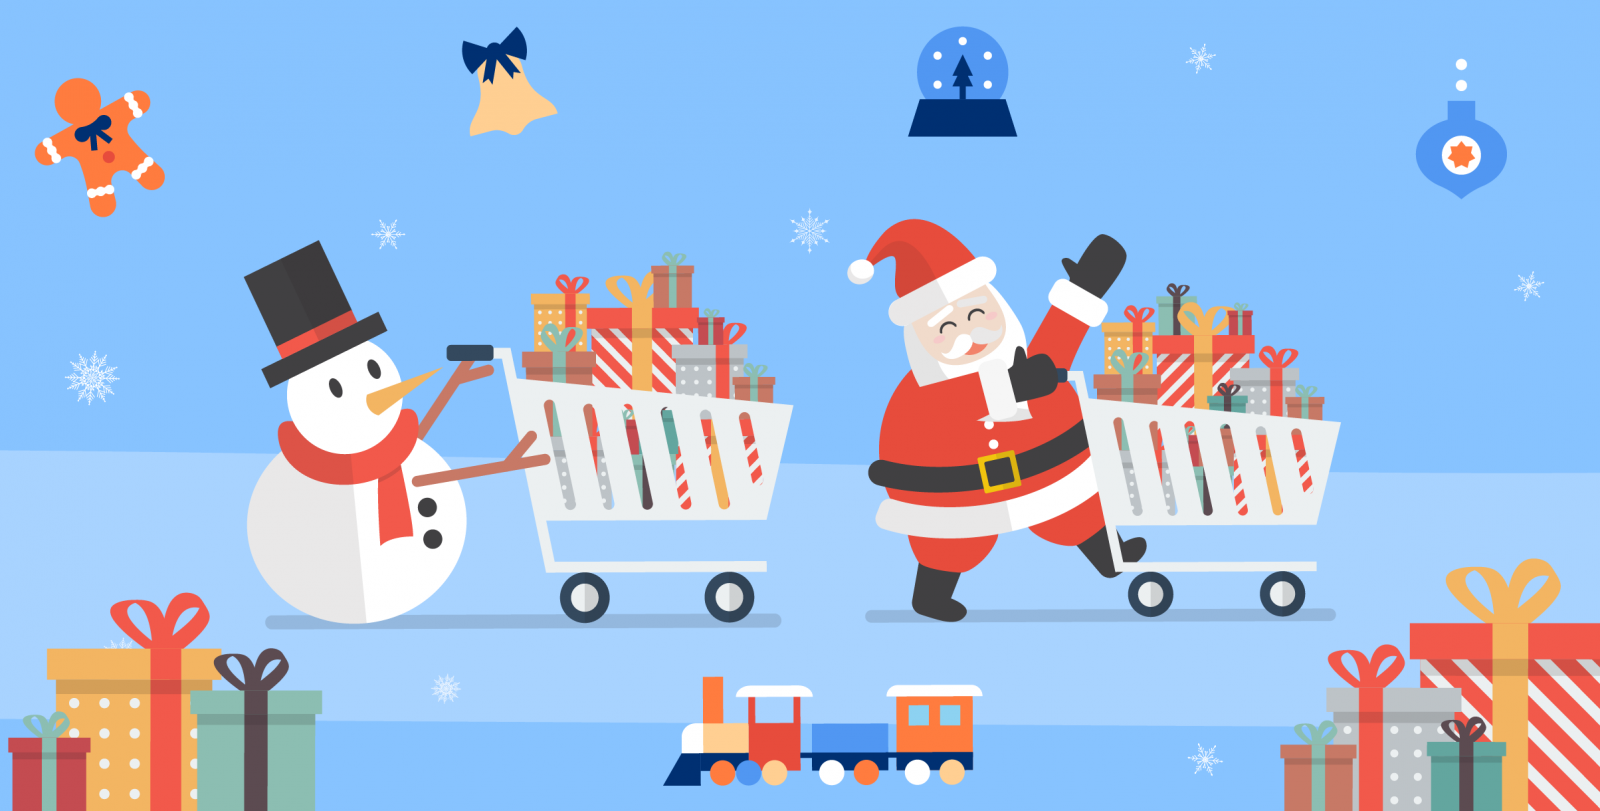 Santa and a snowman push shopping carts full of colorful gifts